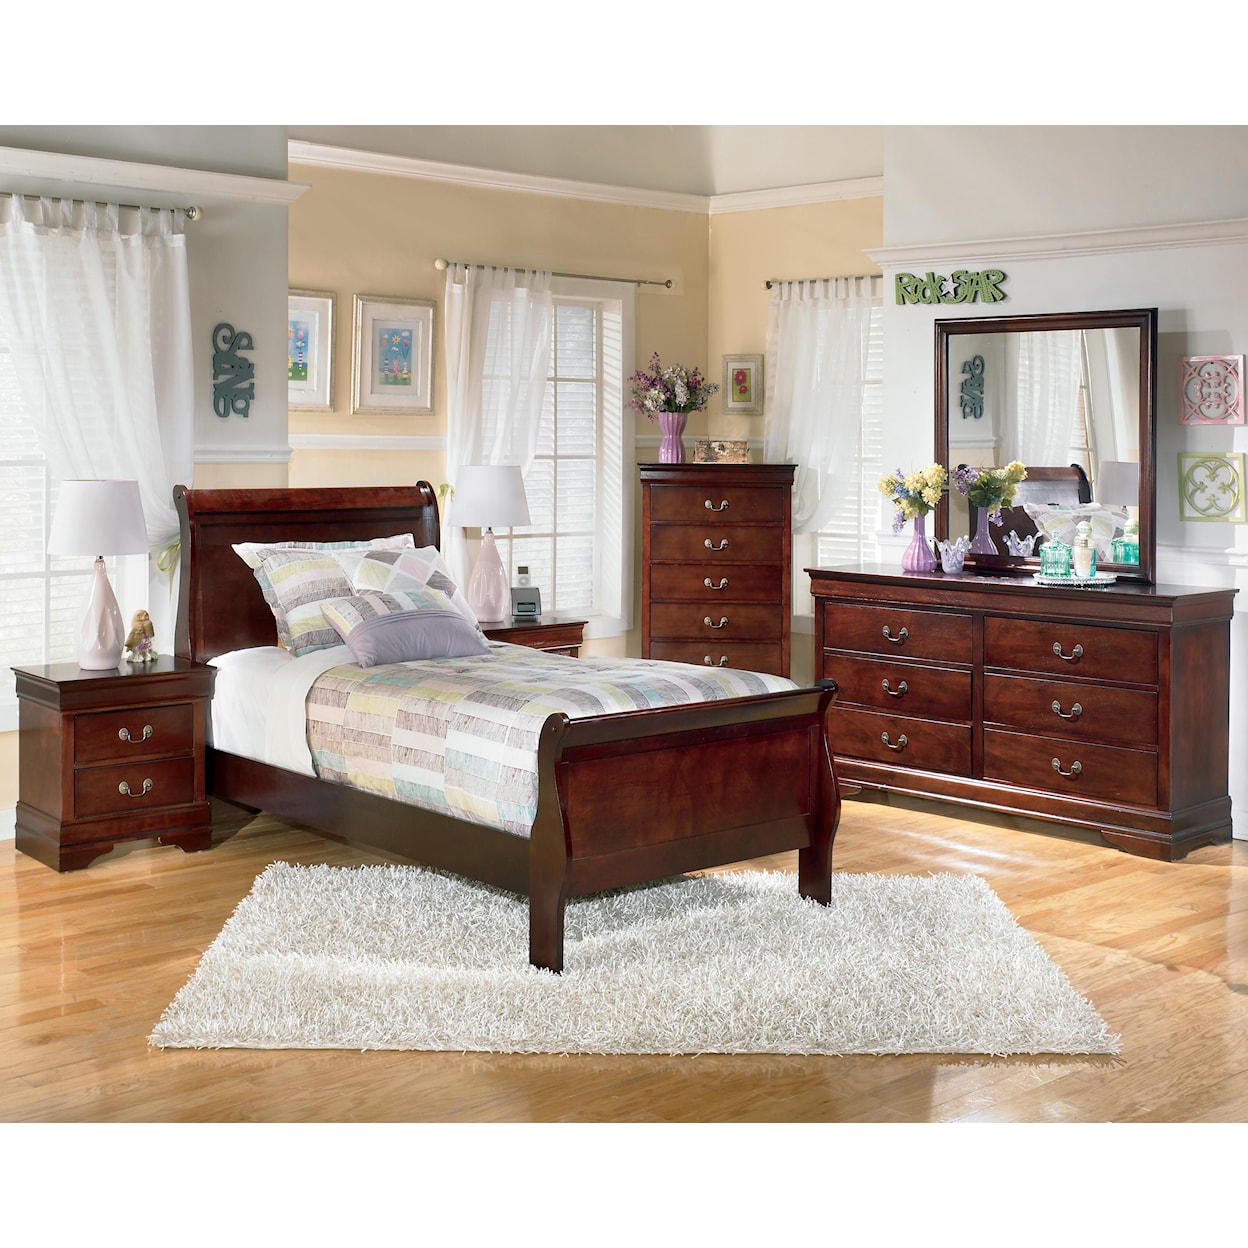 Ashley Furniture Signature Design Alisdair 3 Piece Twin Bedroom Group